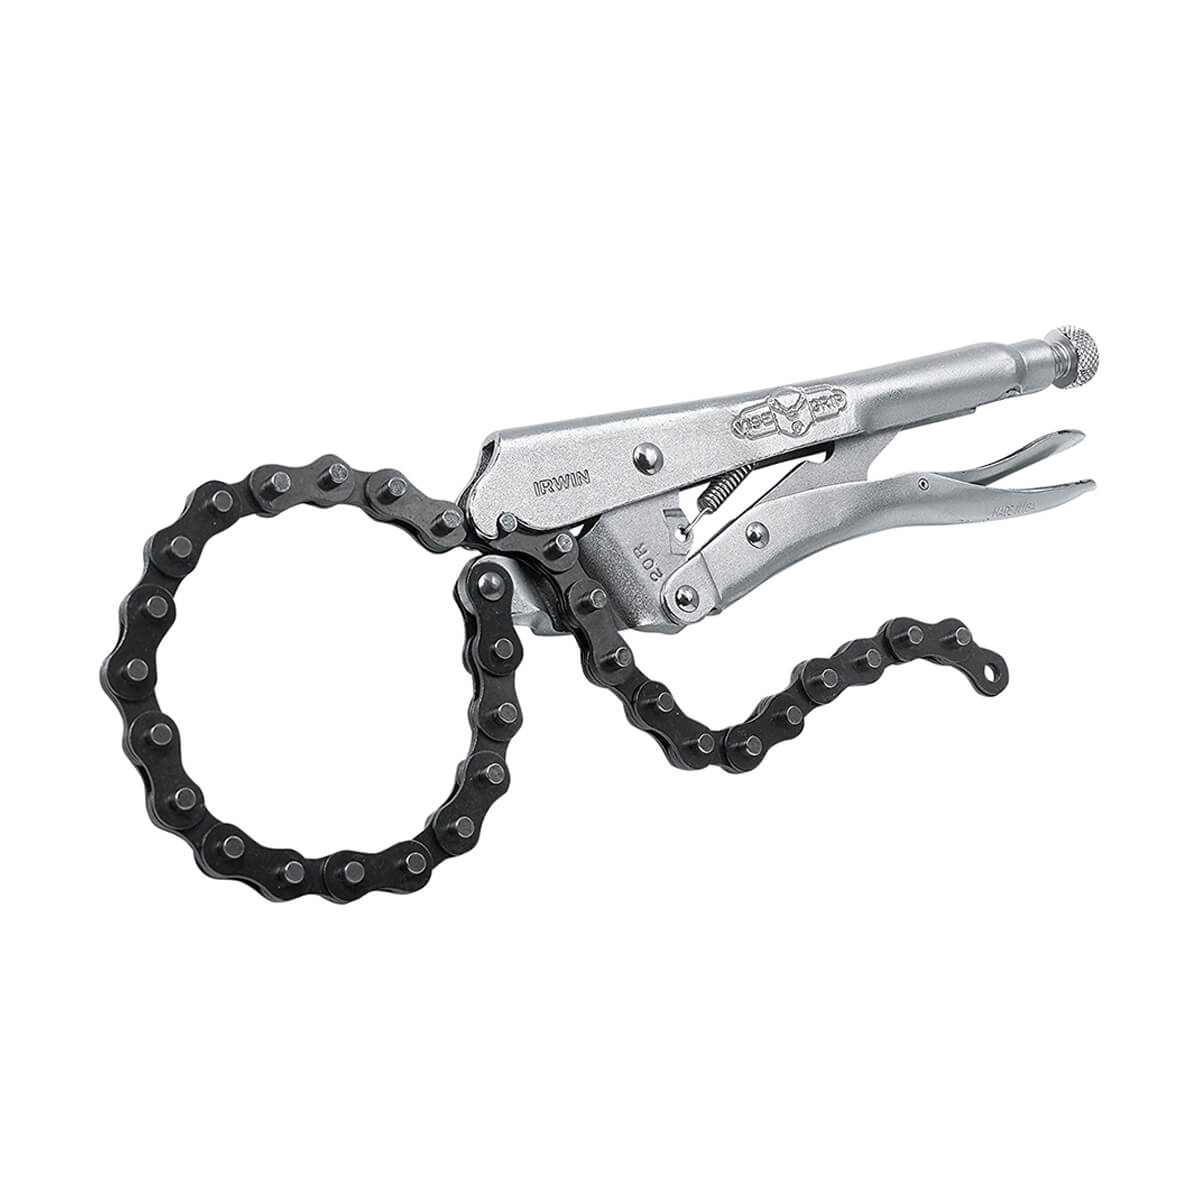 Vise Grip Locking Chain Clamp